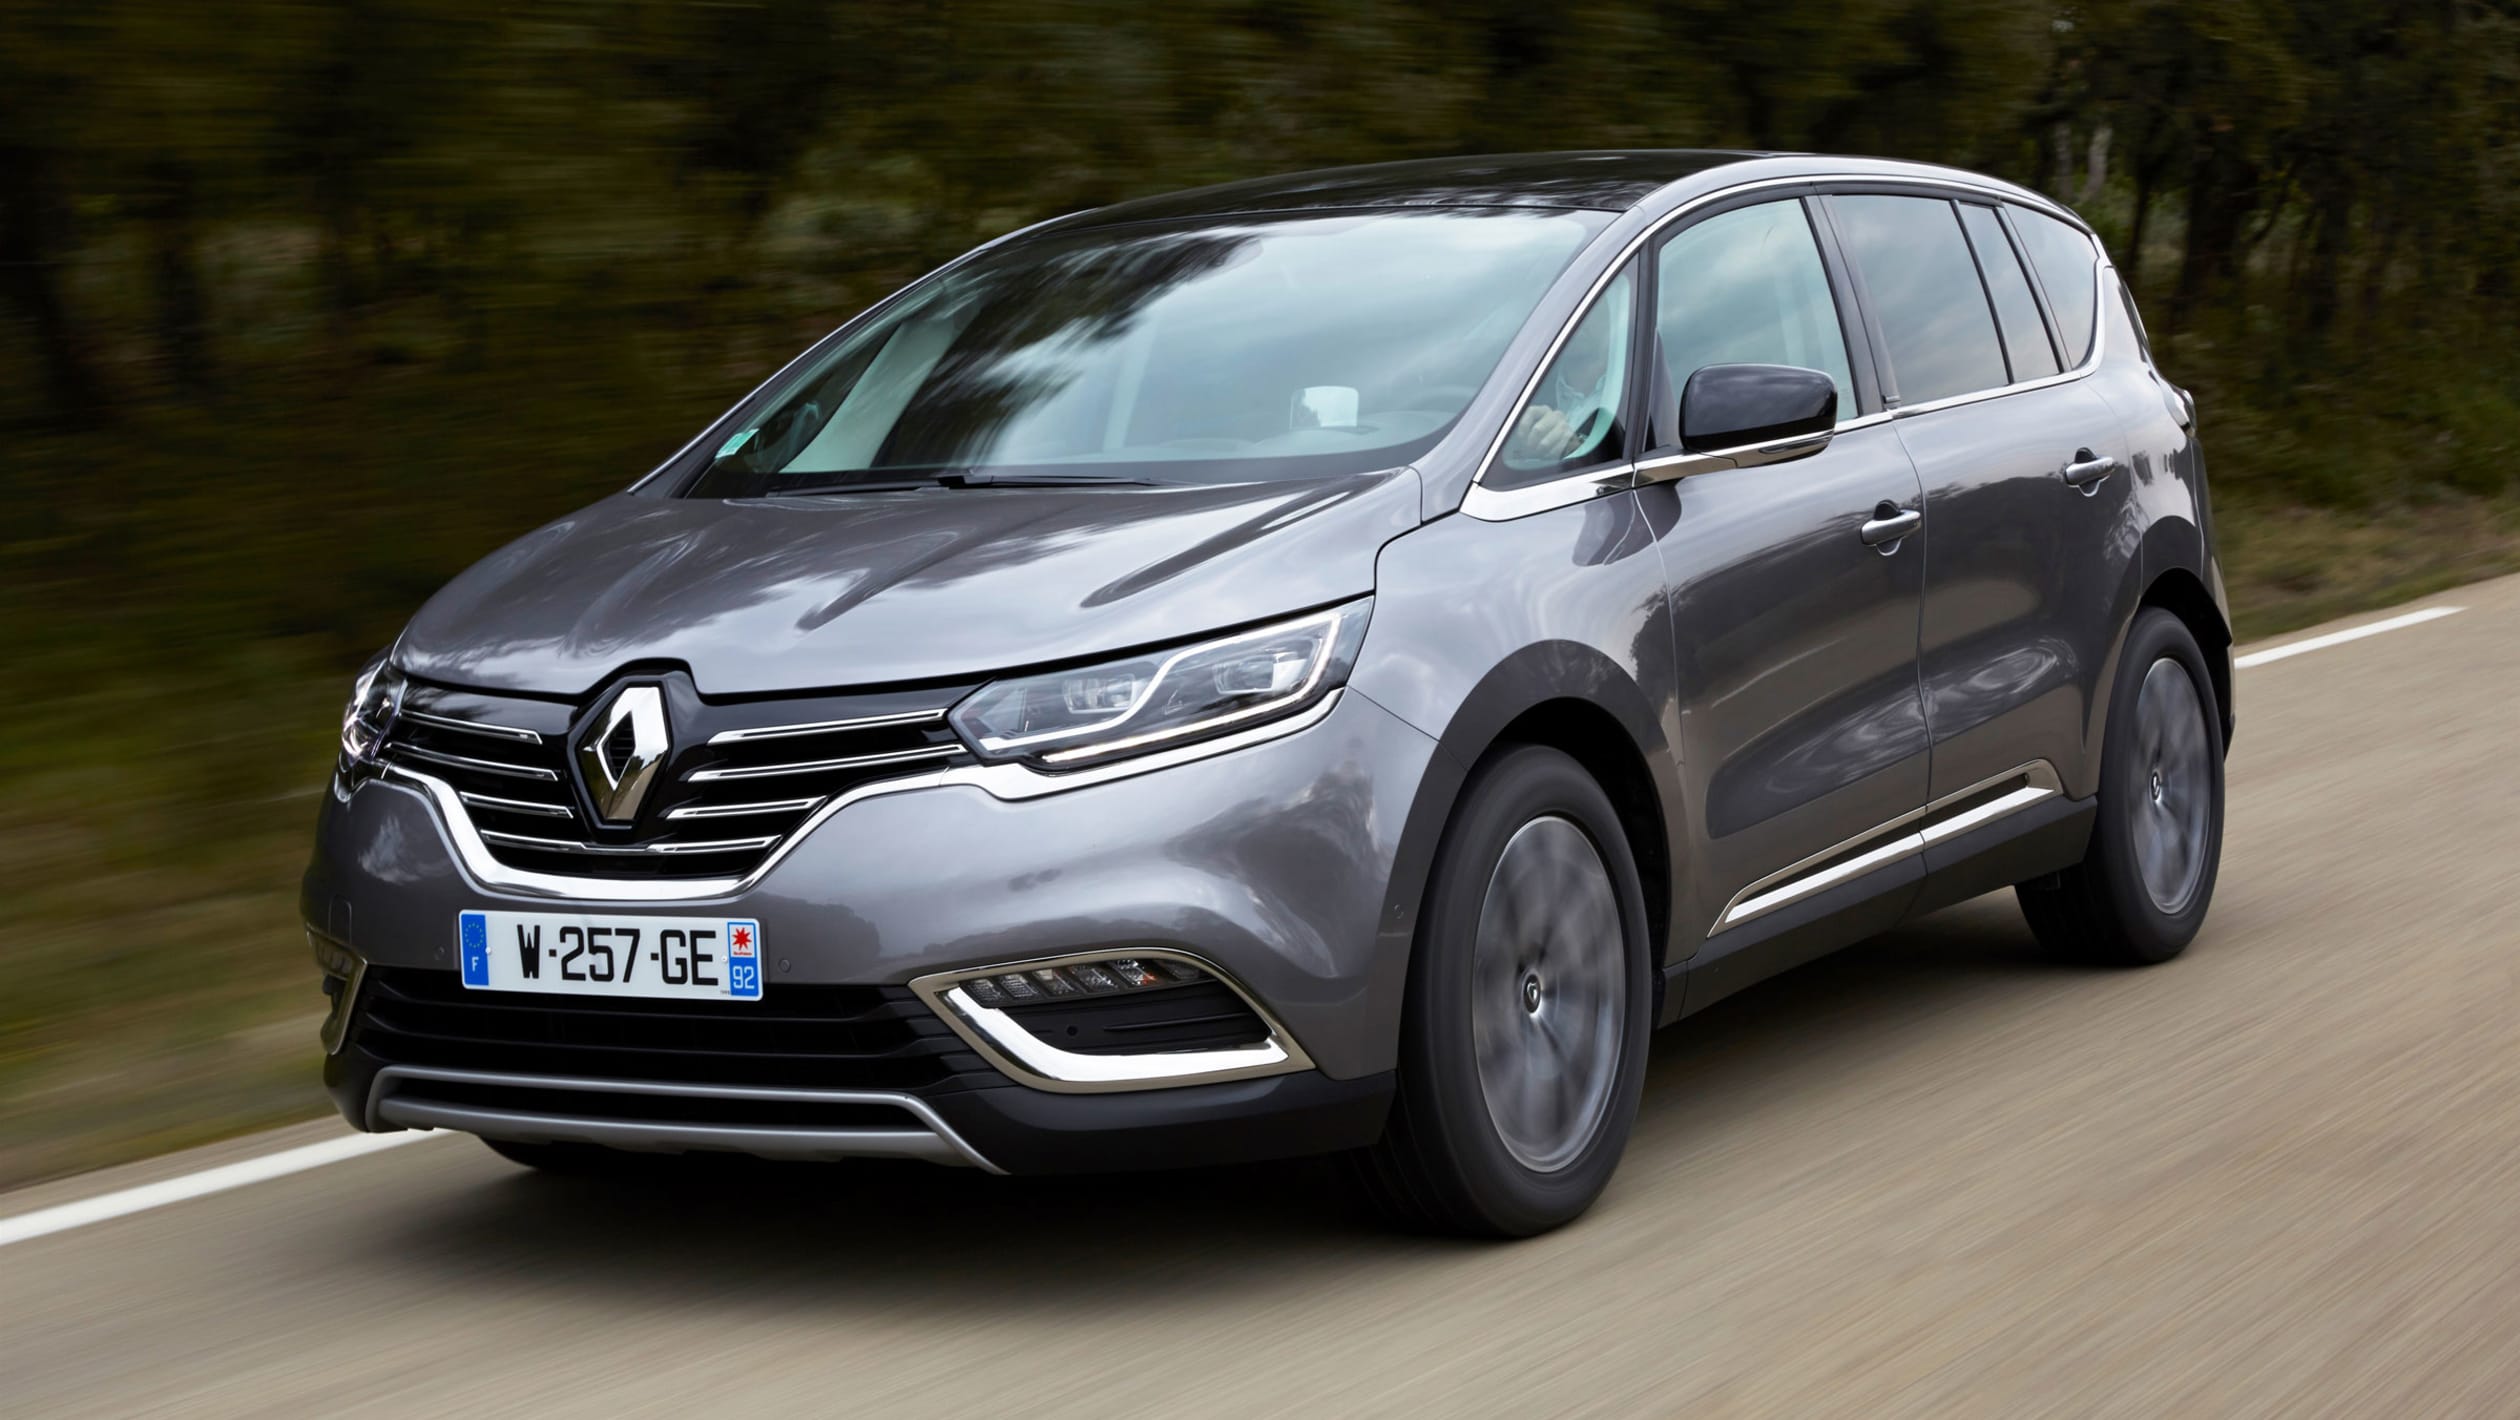 Renault Espace 1.6 diesel 2015 review Auto Express